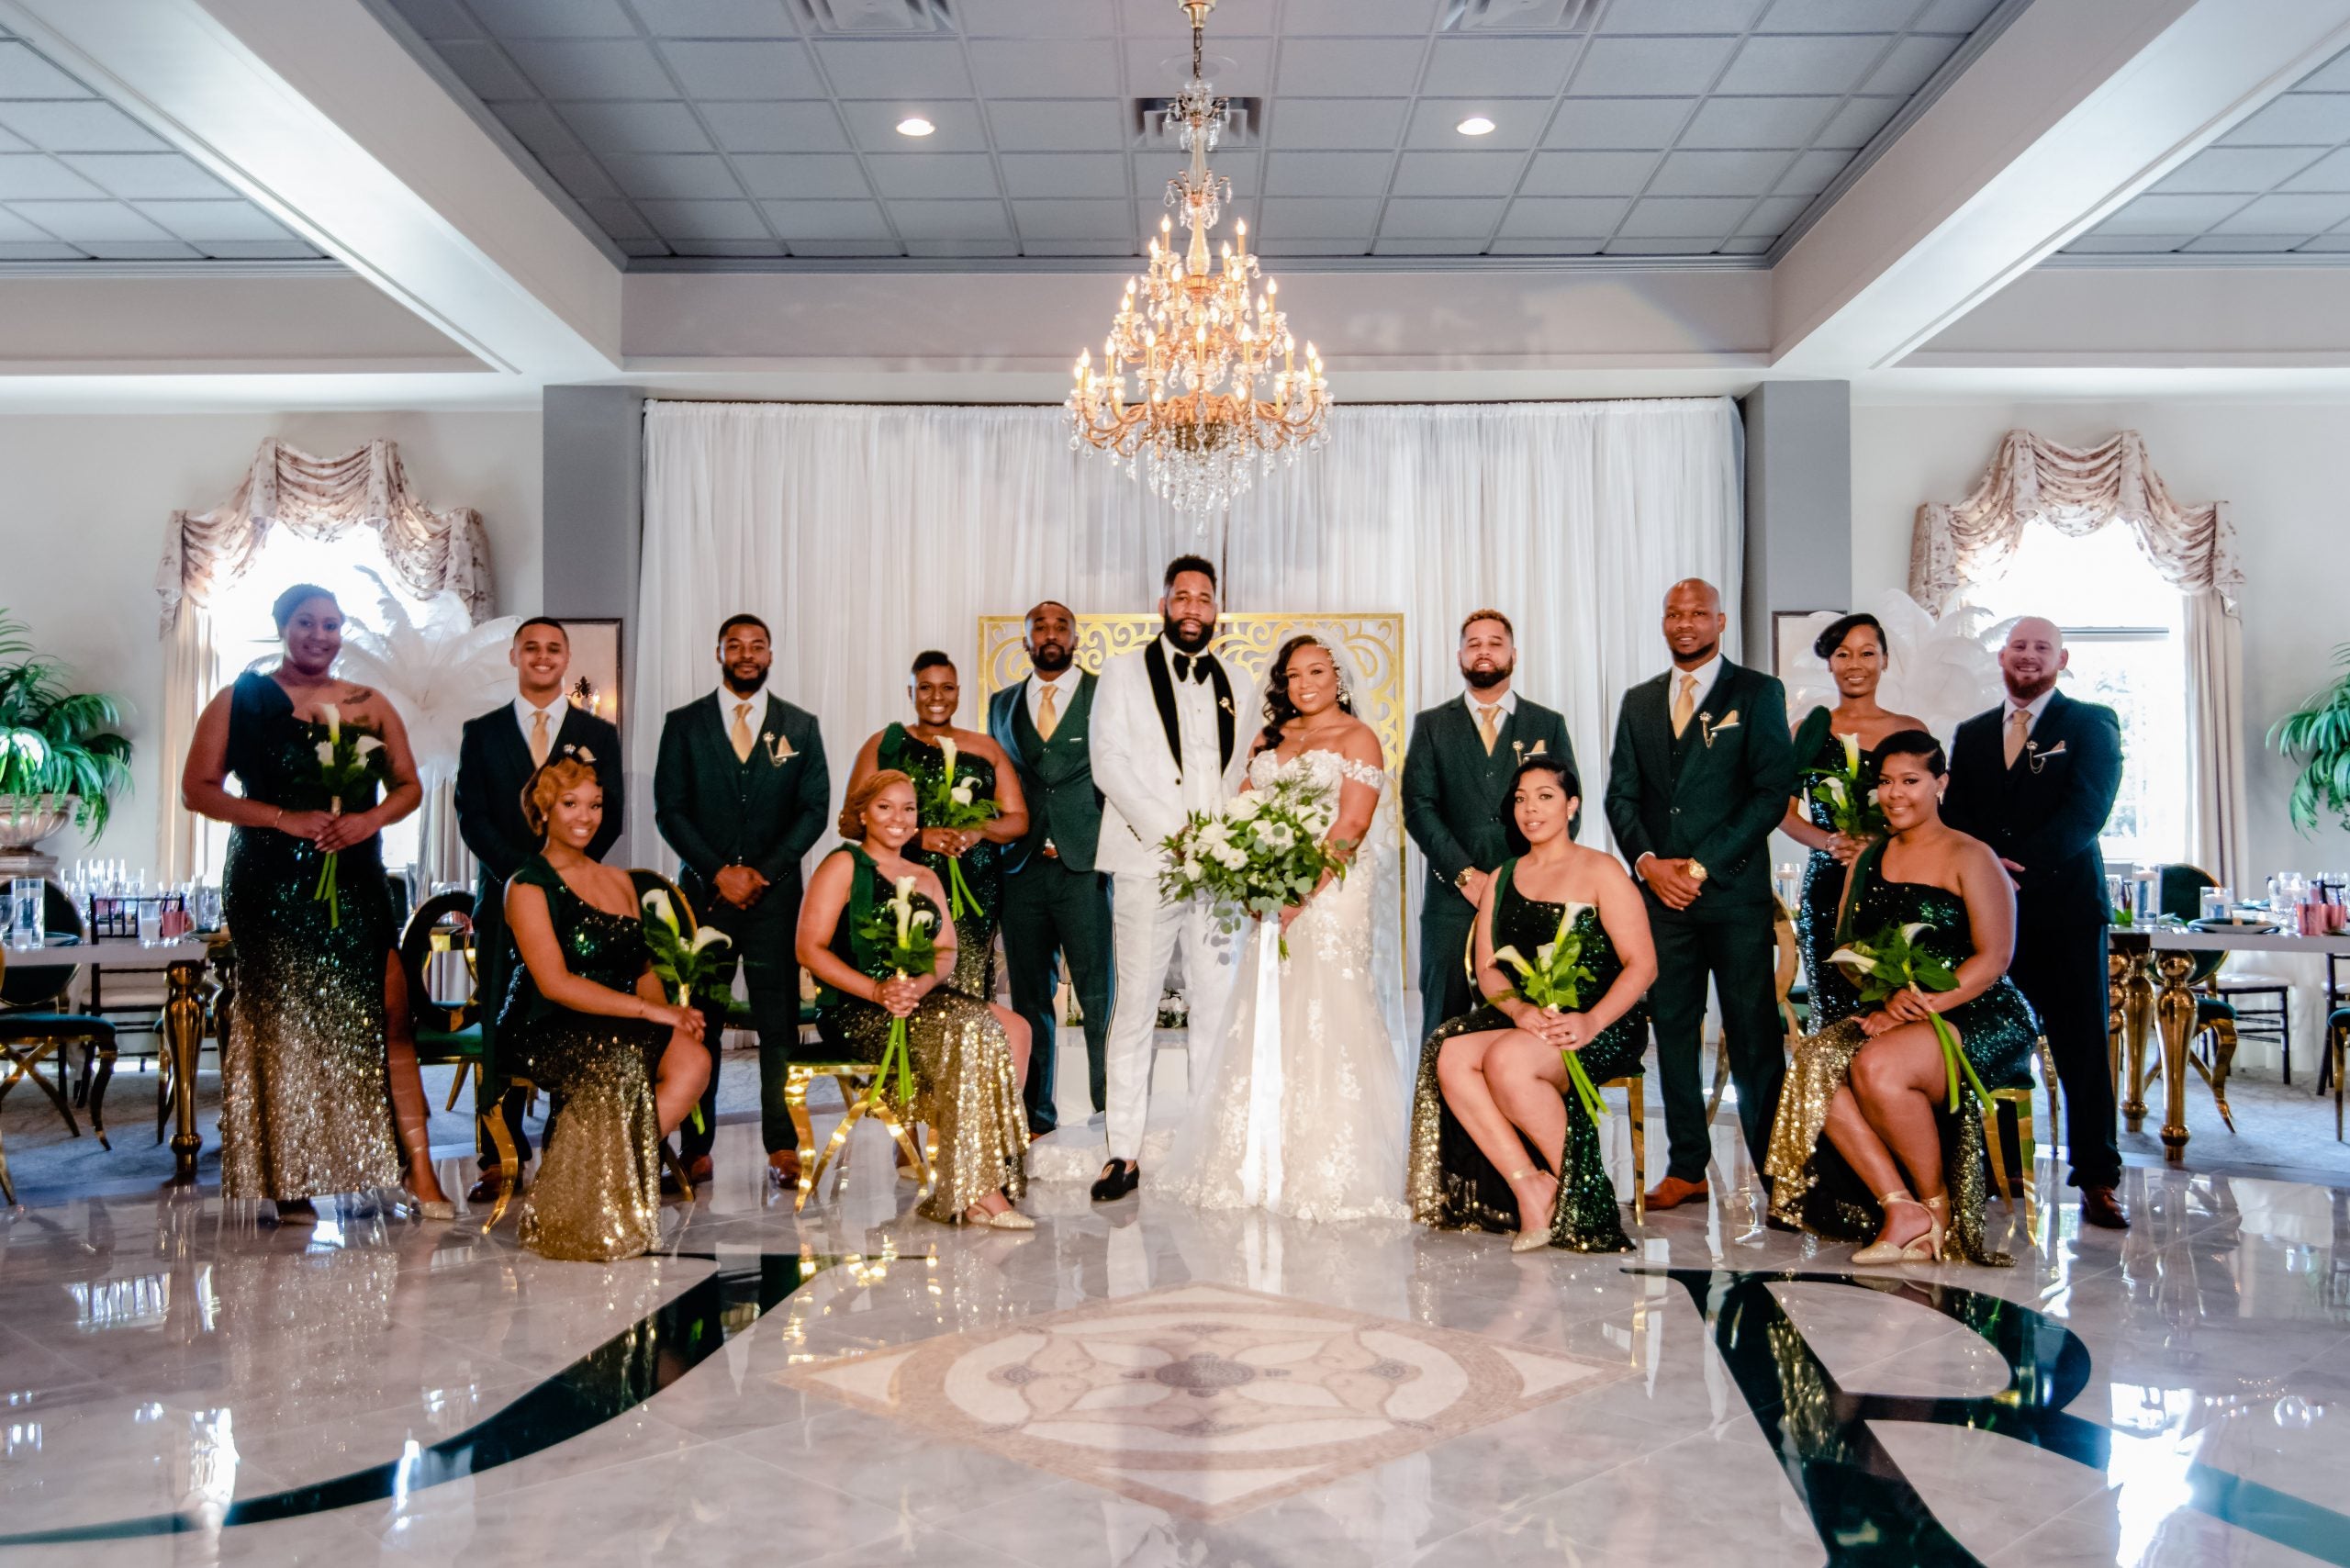 Bridal Bliss: Joscelyn And Josue's Winter Wedding In Atlanta Was Oh So Glamorous